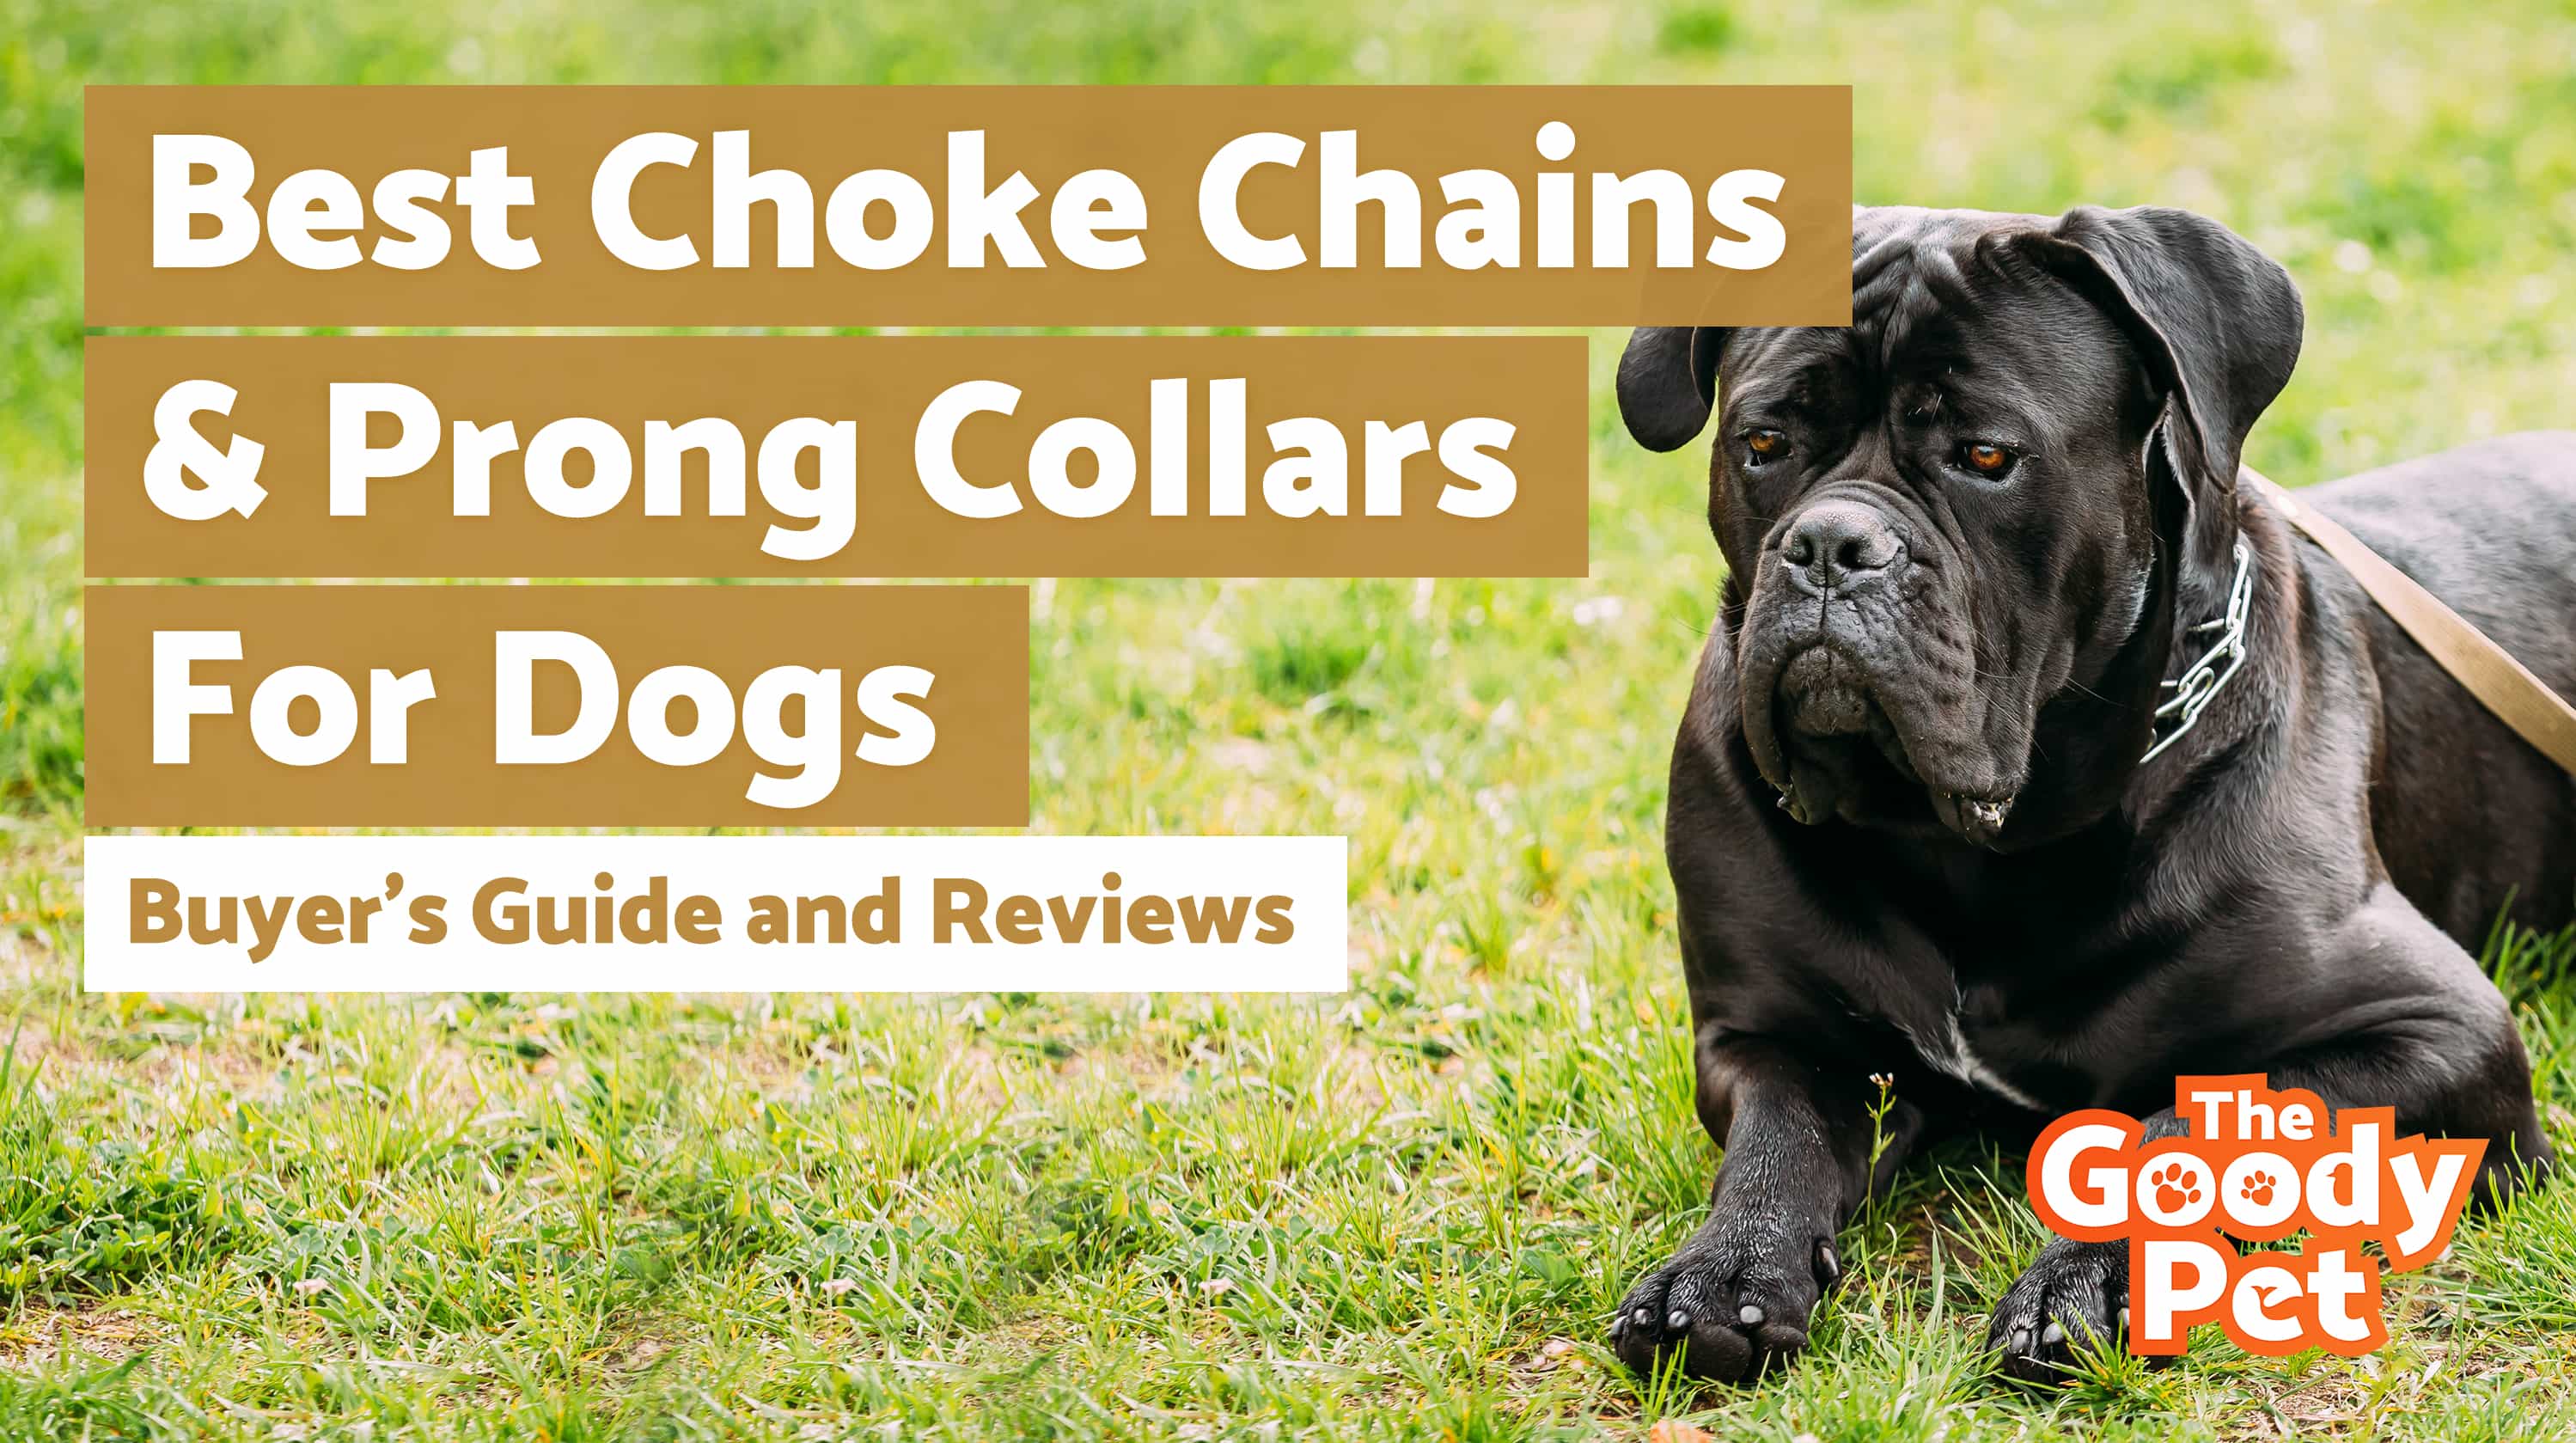 prong dog collars choke dogs thegoodypet puppy human chart pet age